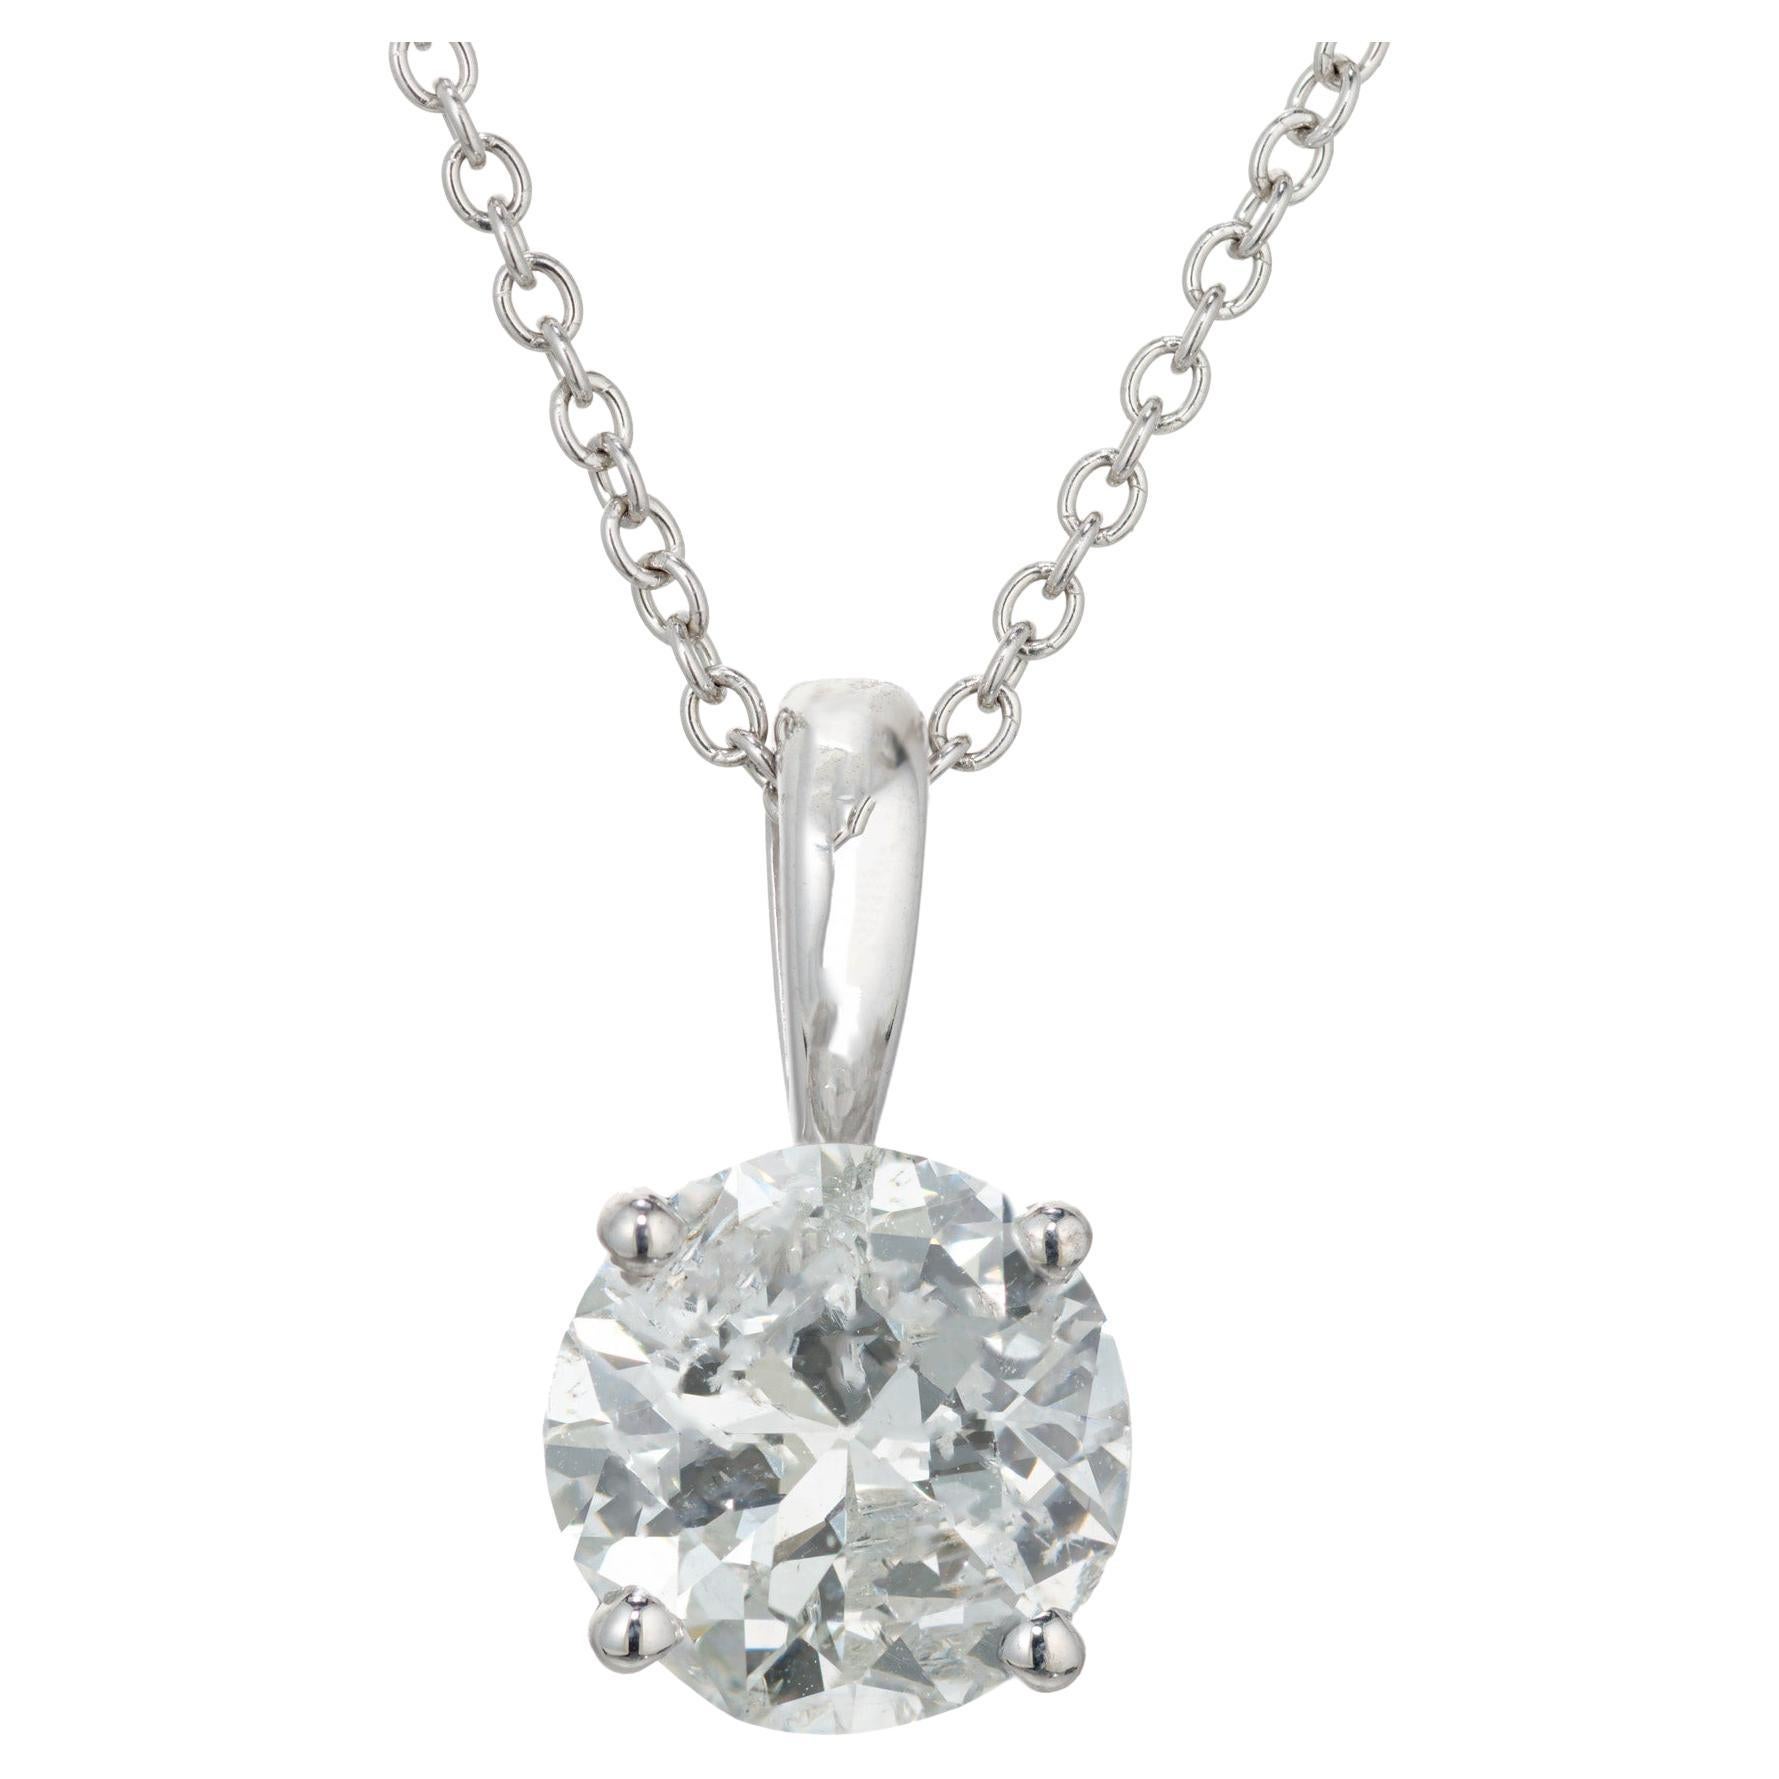 Peter Suchy EGL Certified 1.60 Carat Round Diamond Platinum Pendant Necklace